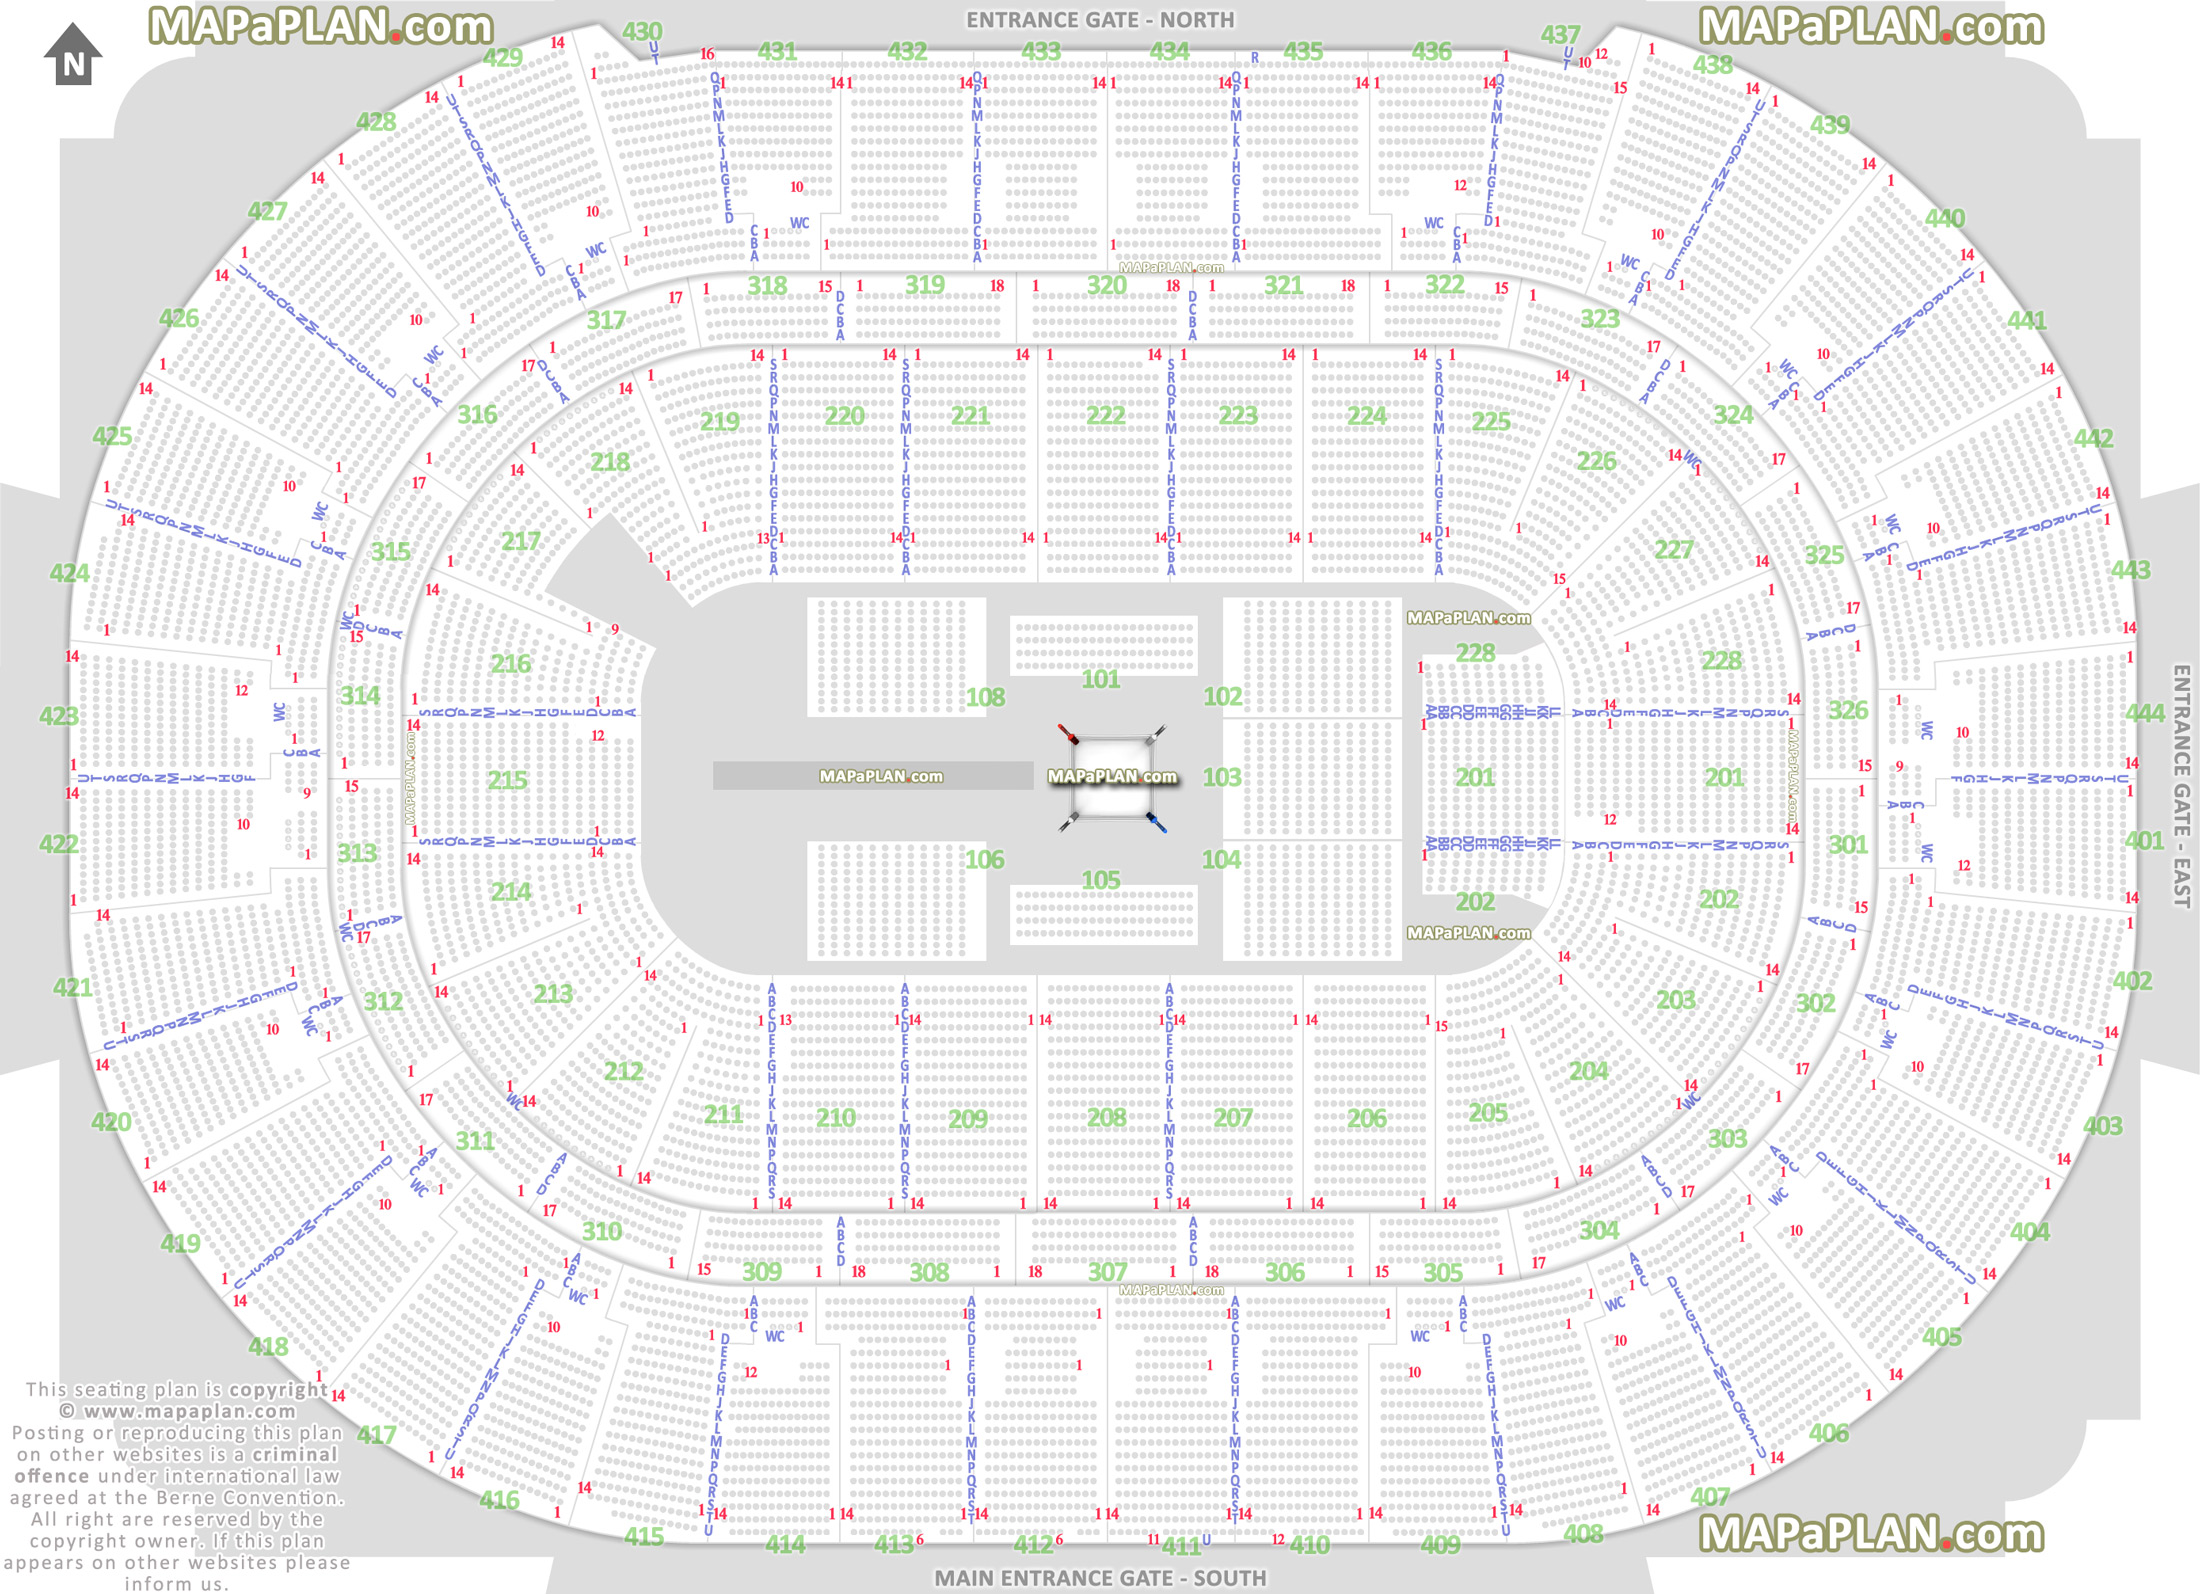 Honda Center Seating Chart